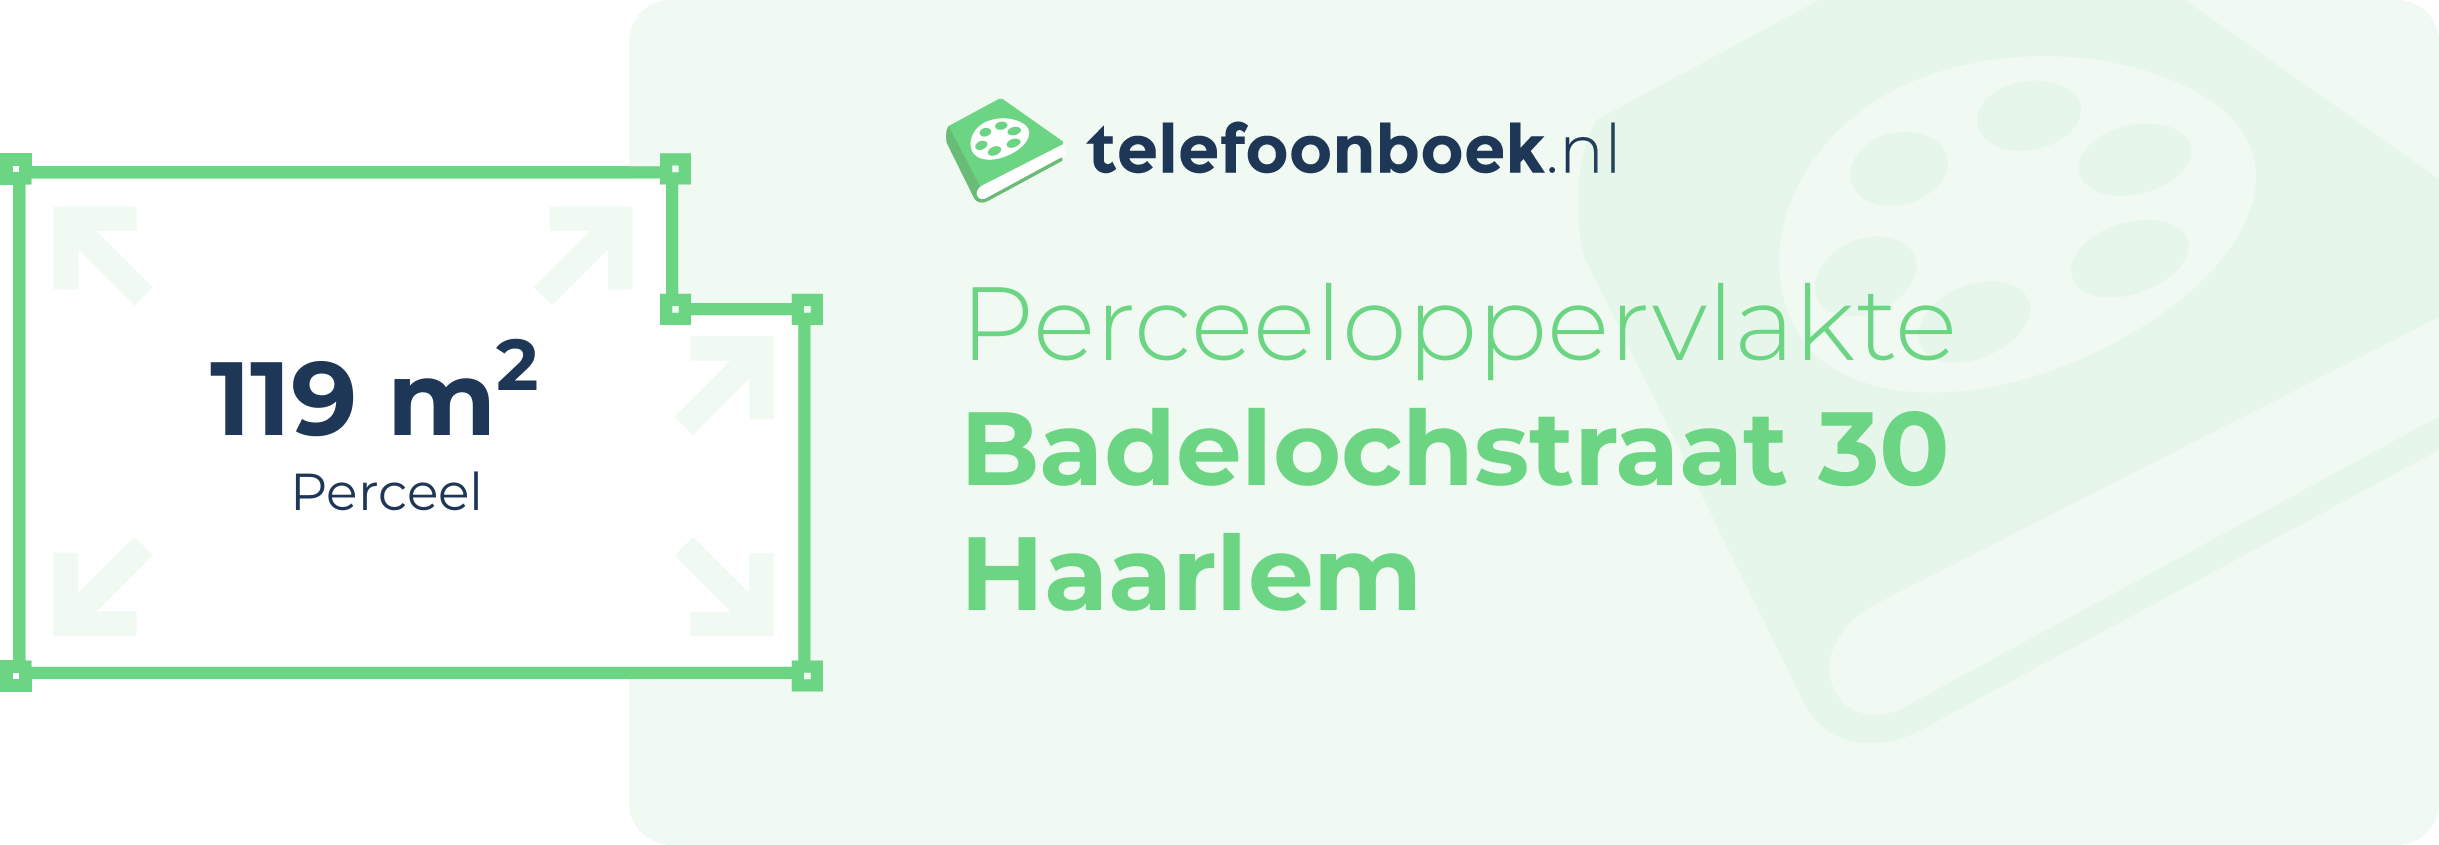 Perceeloppervlakte Badelochstraat 30 Haarlem